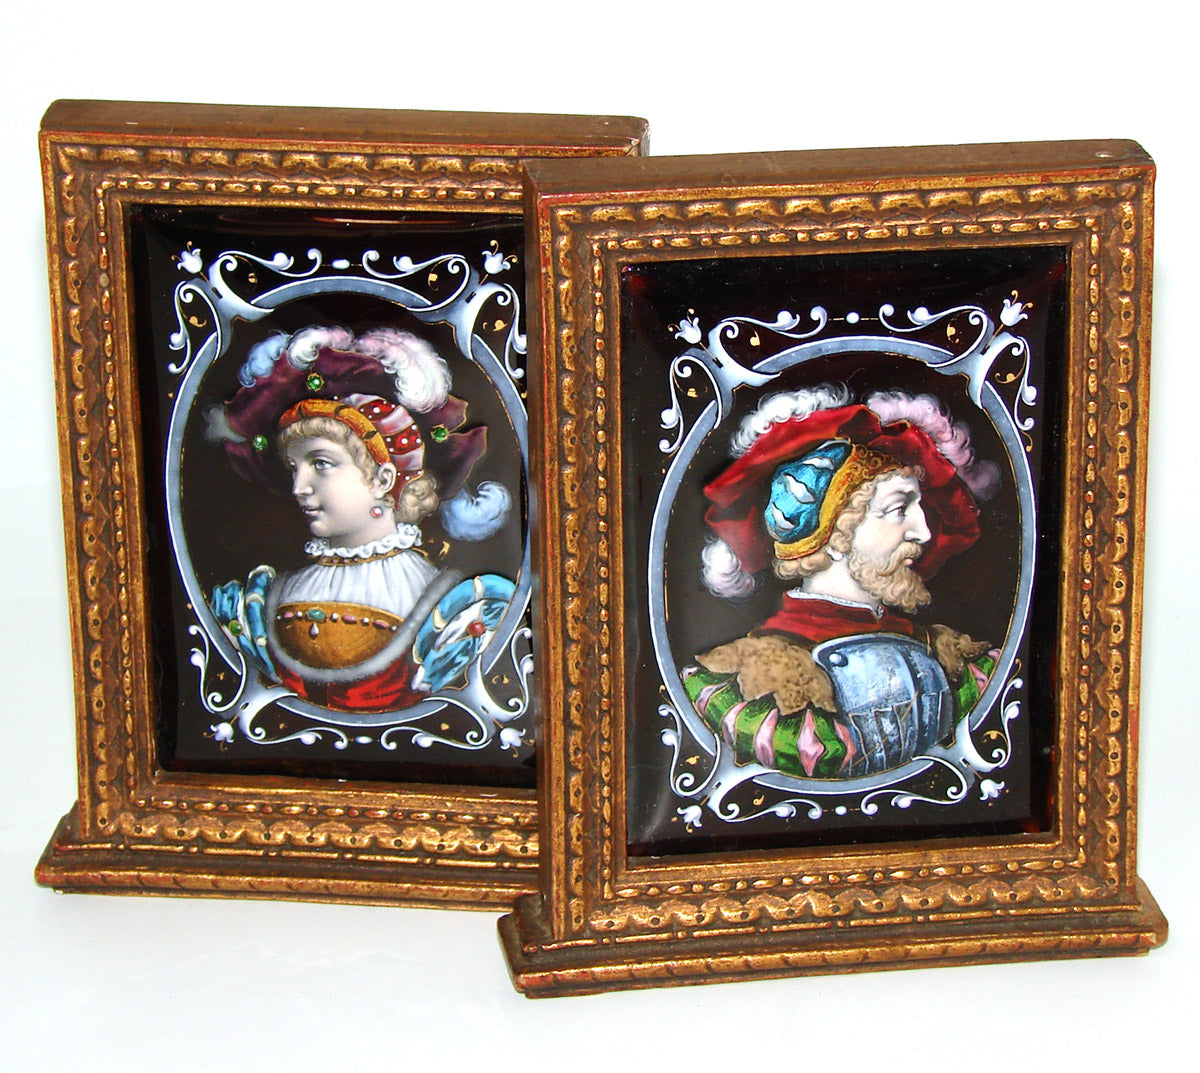 RARE! Antique French Limoges Kiln-fired Enamel Portrait Miniature PAIR, Gilt Gesso Frames